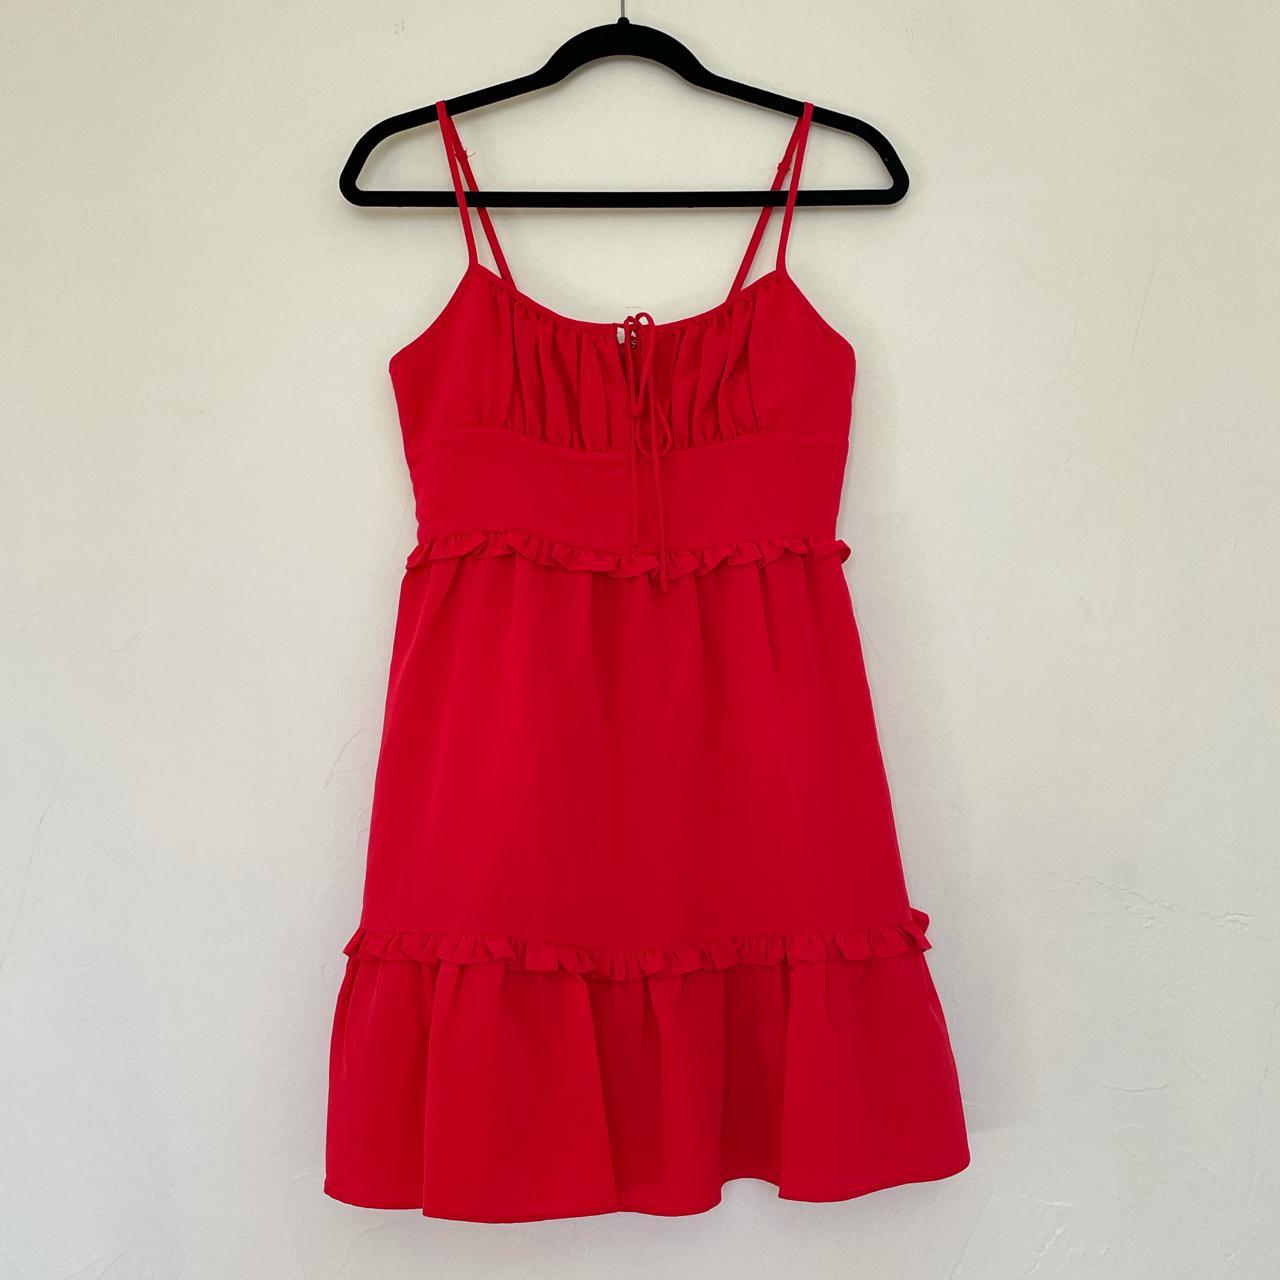 Product Image 1 - BCBGeneration red mini dress.
Adjustable straps.